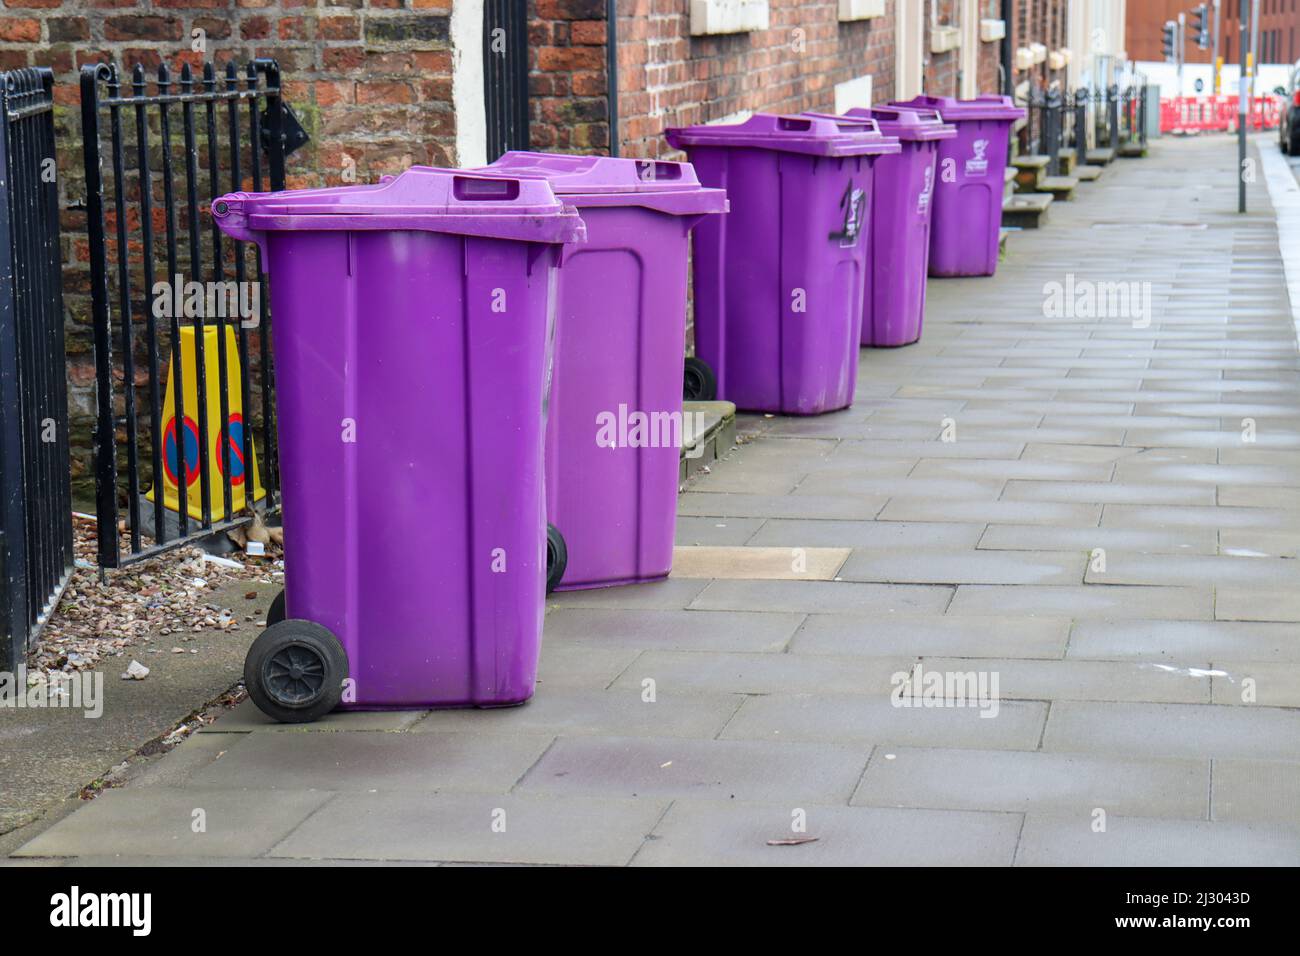 https://c8.alamy.com/comp/2J3043D/purple-wheelie-bins-on-a-liverpool-street-2J3043D.jpg